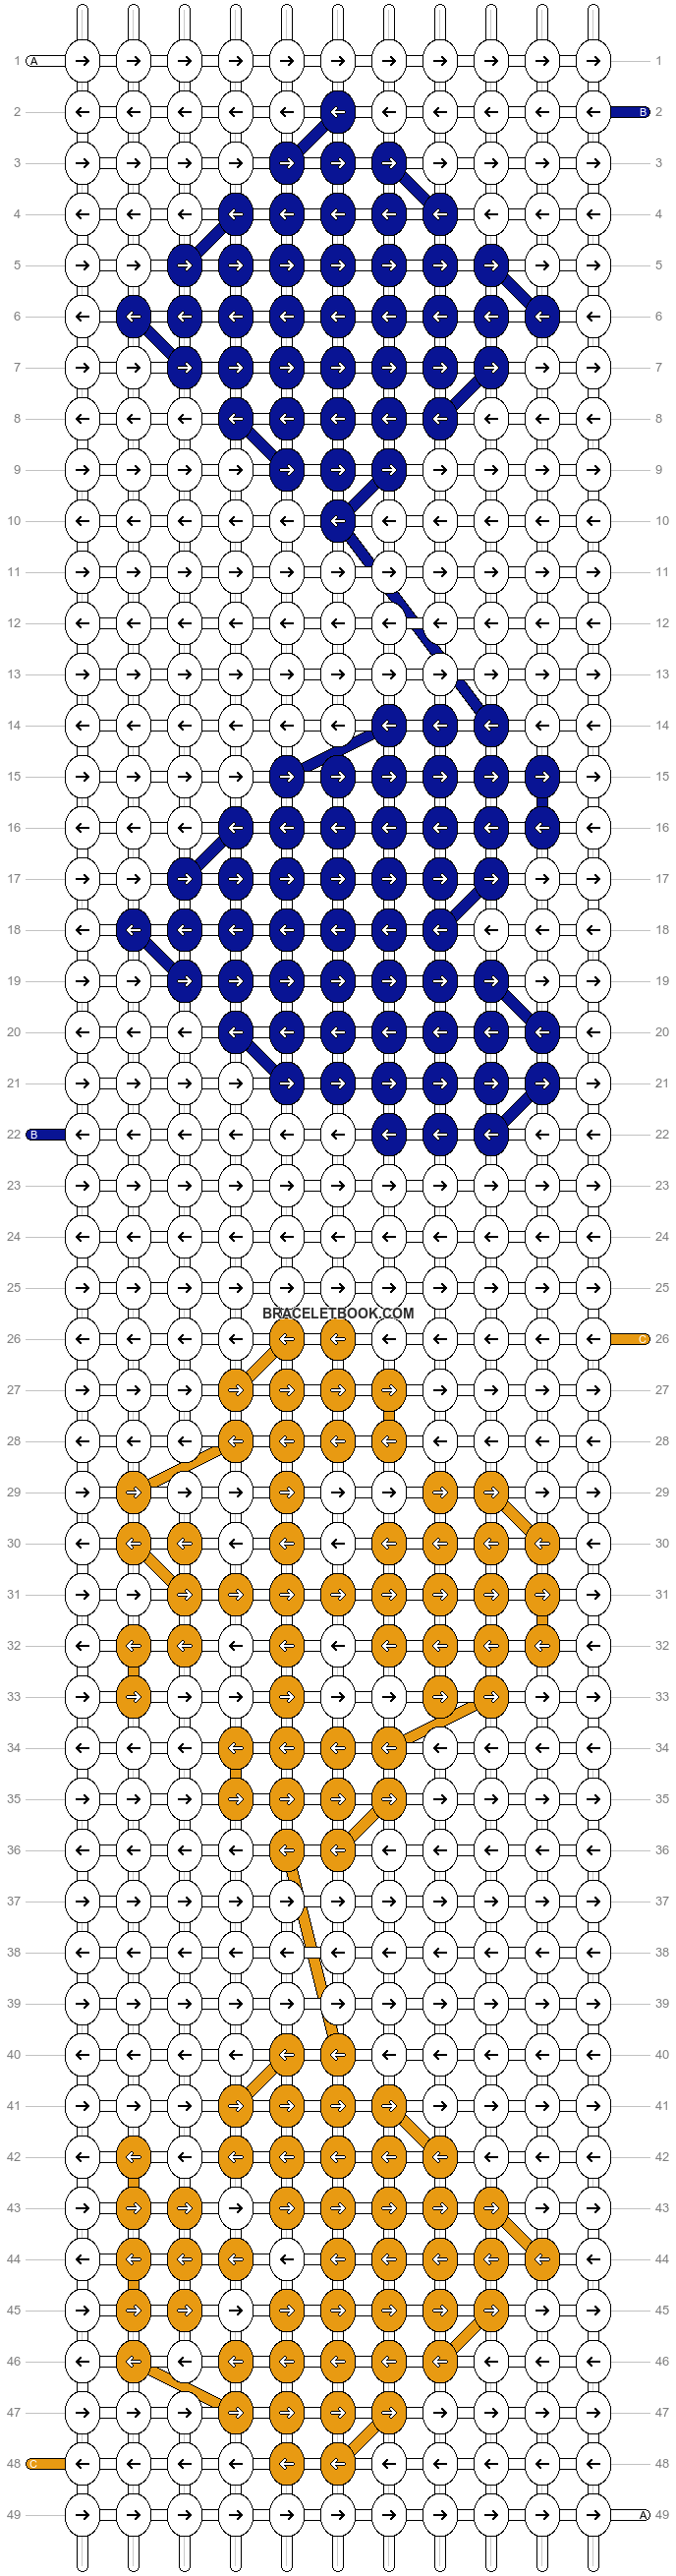 Alpha pattern #28704 variation #16618 pattern